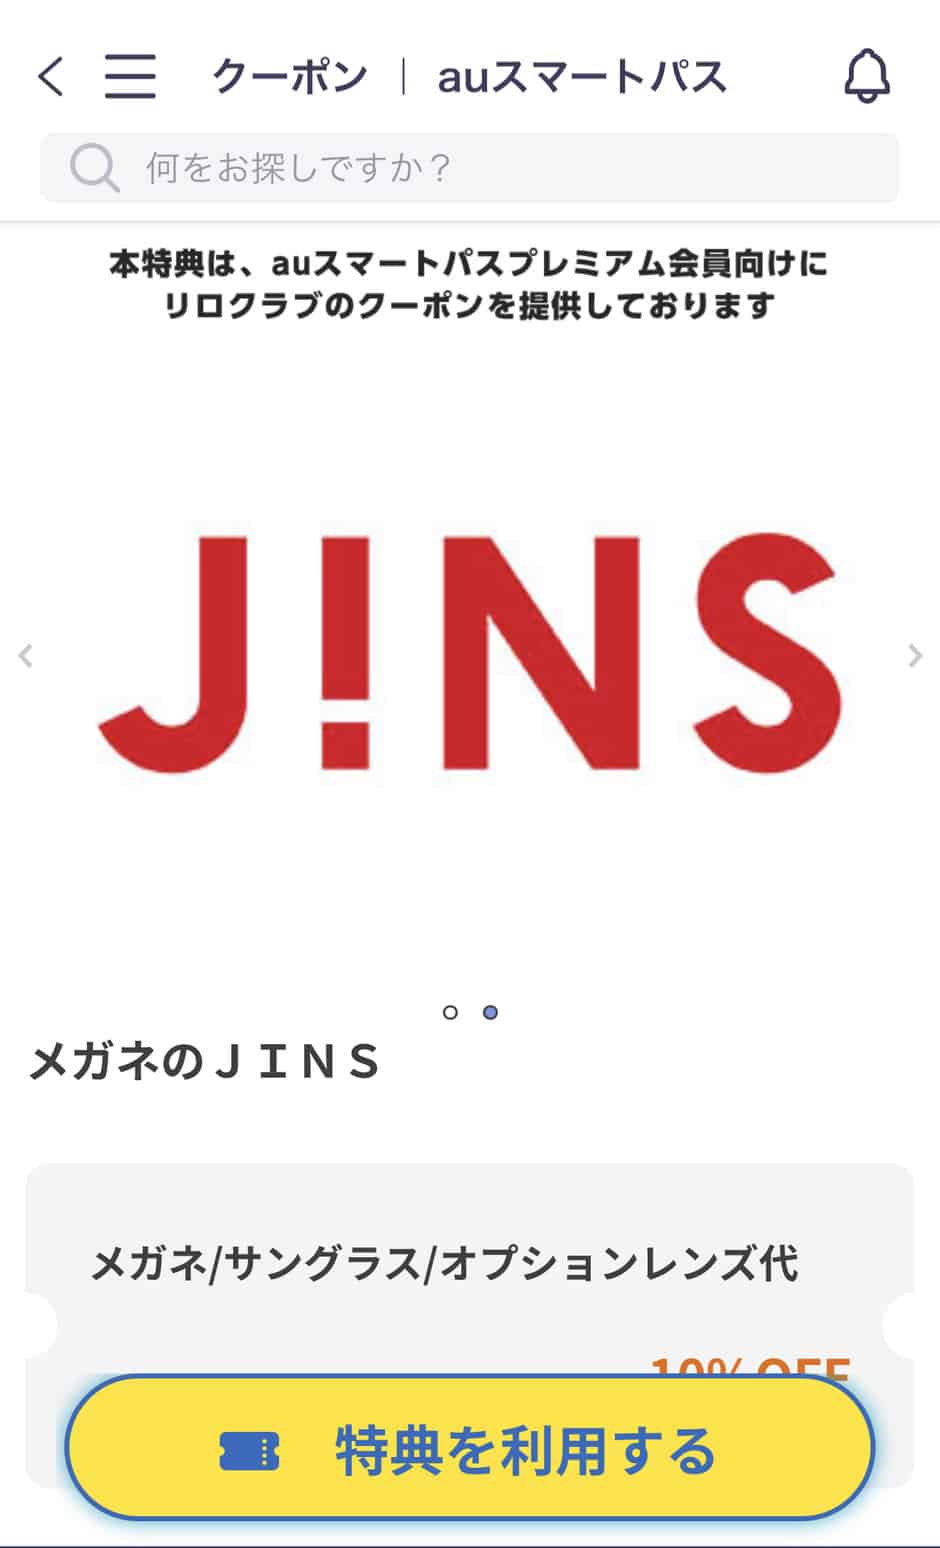 【auスマートパスプレミアム限定】JINS「10%OFF」割引クーポン